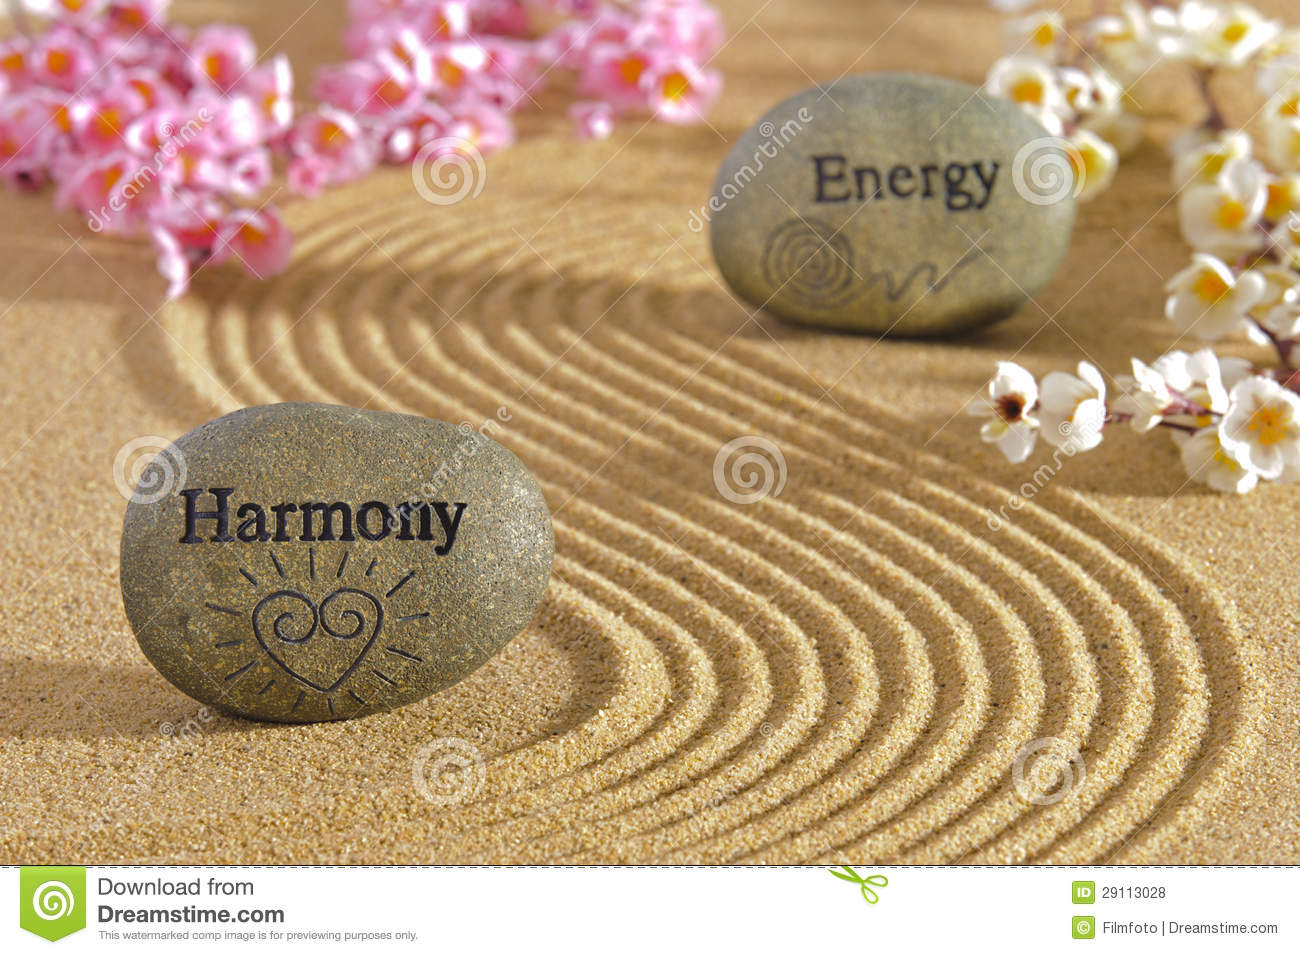 Amazing Harmonie Pictures & Backgrounds